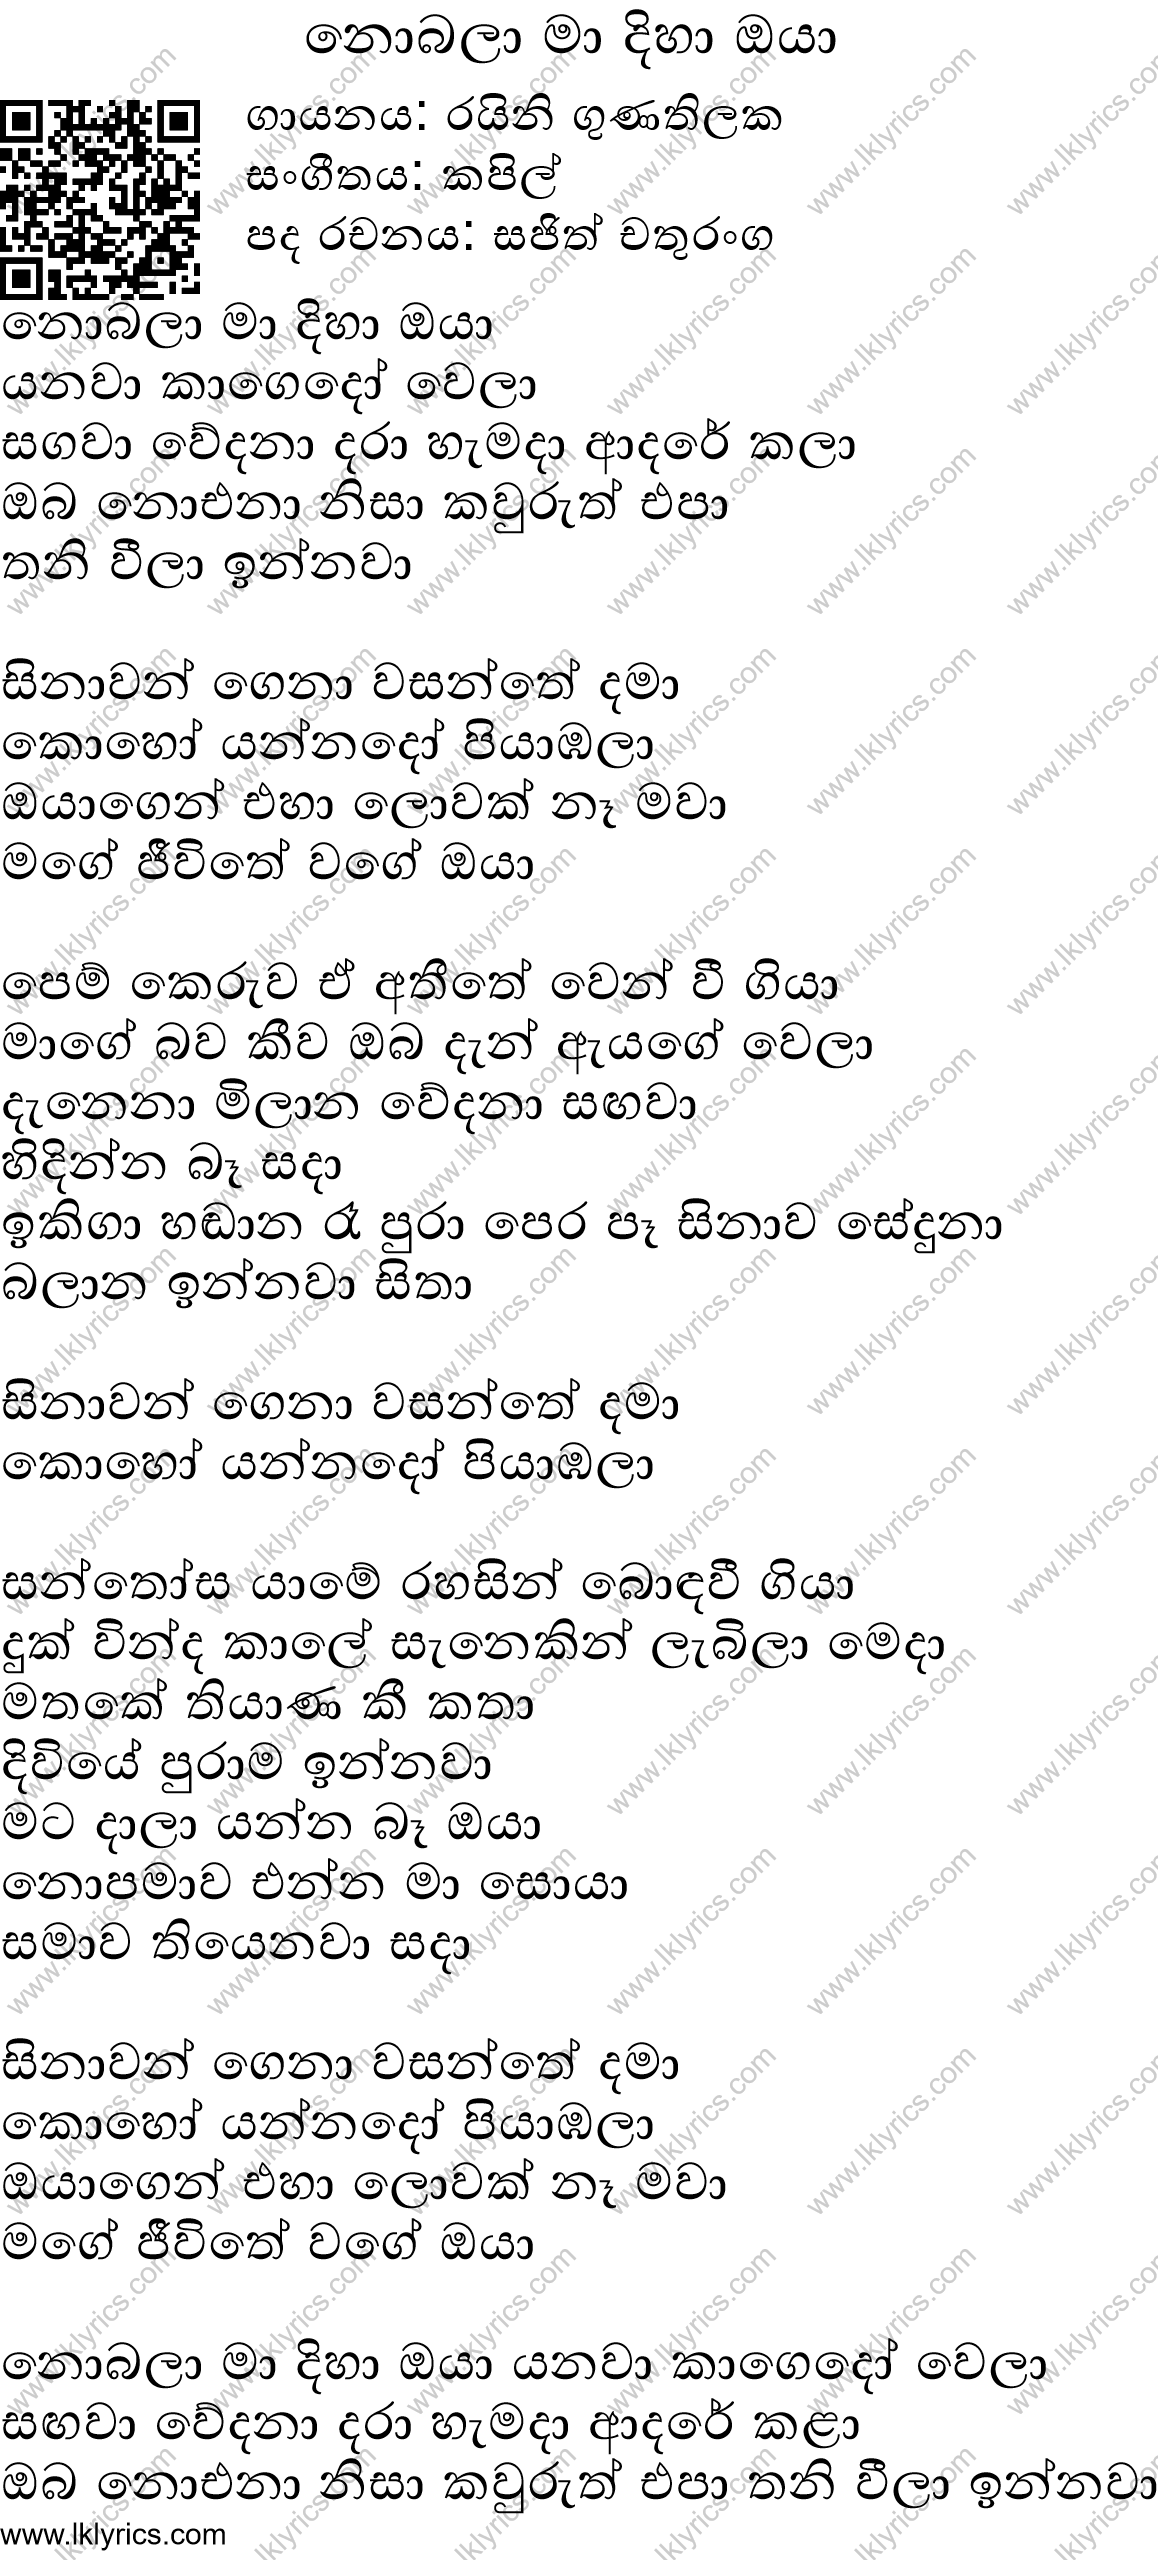 Nobala maa dihaa Lyrics - LK Lyrics